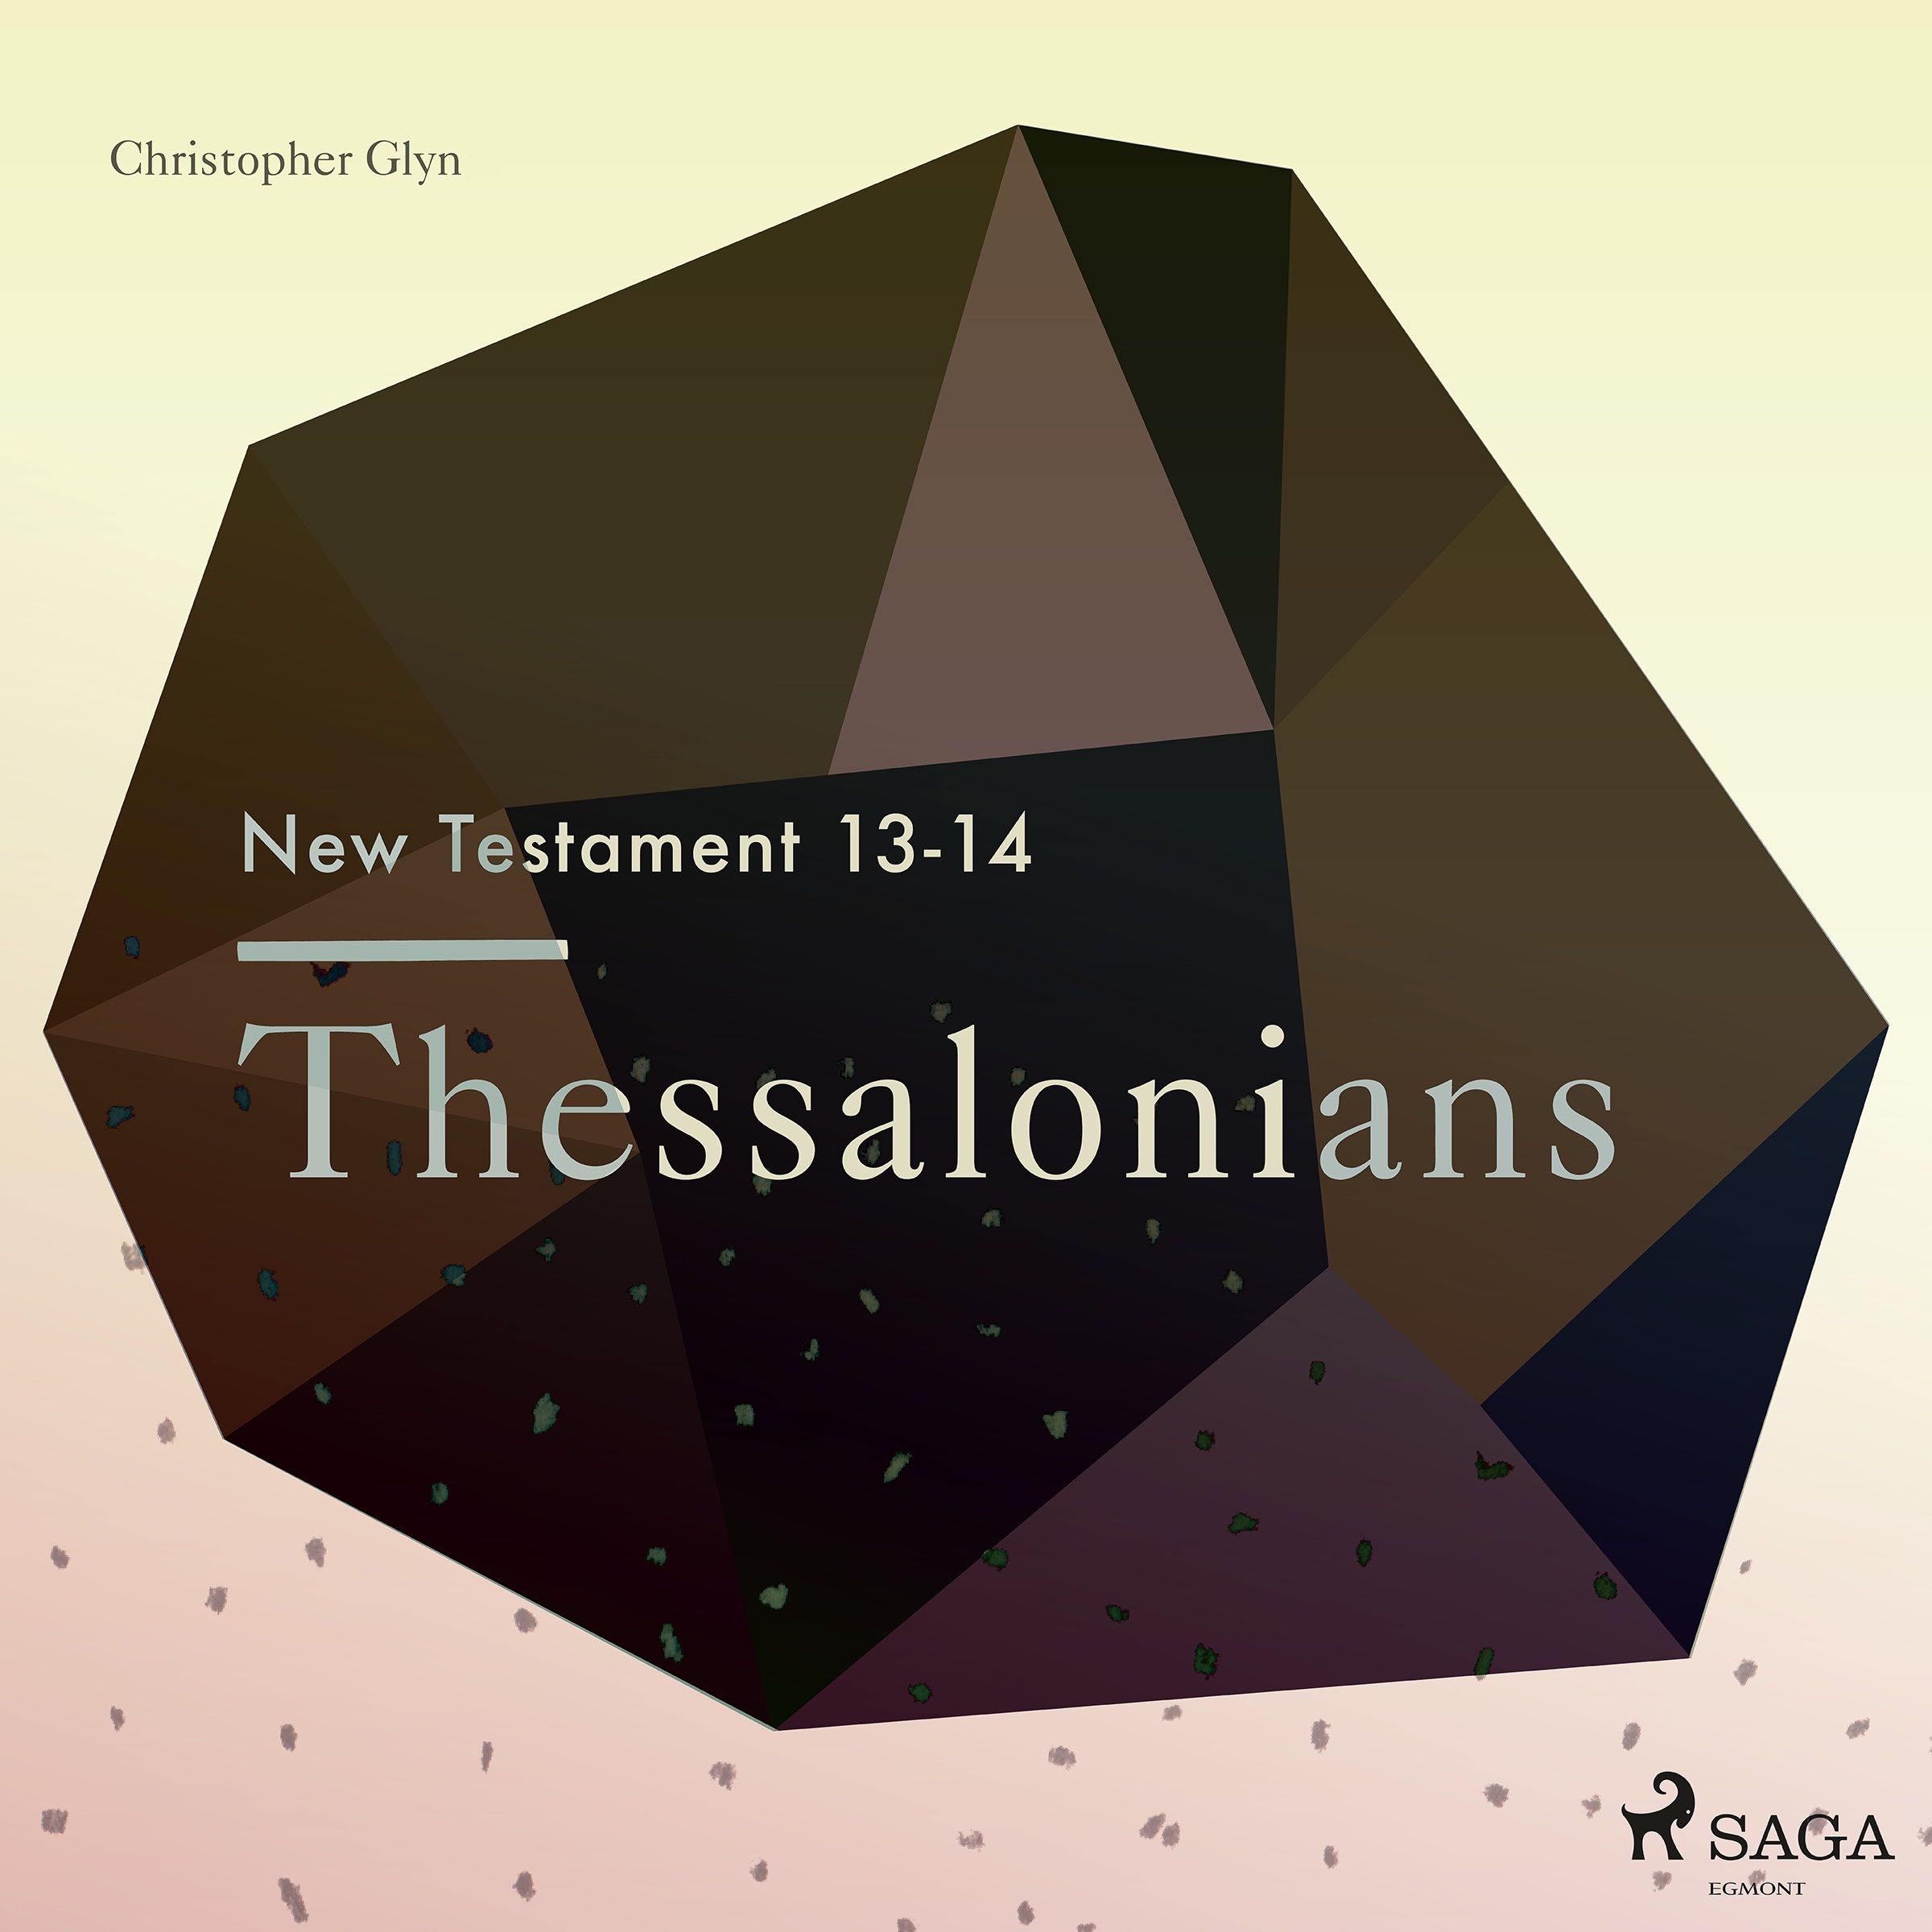 The New Testament 13-14 - Thessalonians, lydbog af Christopher Glyn